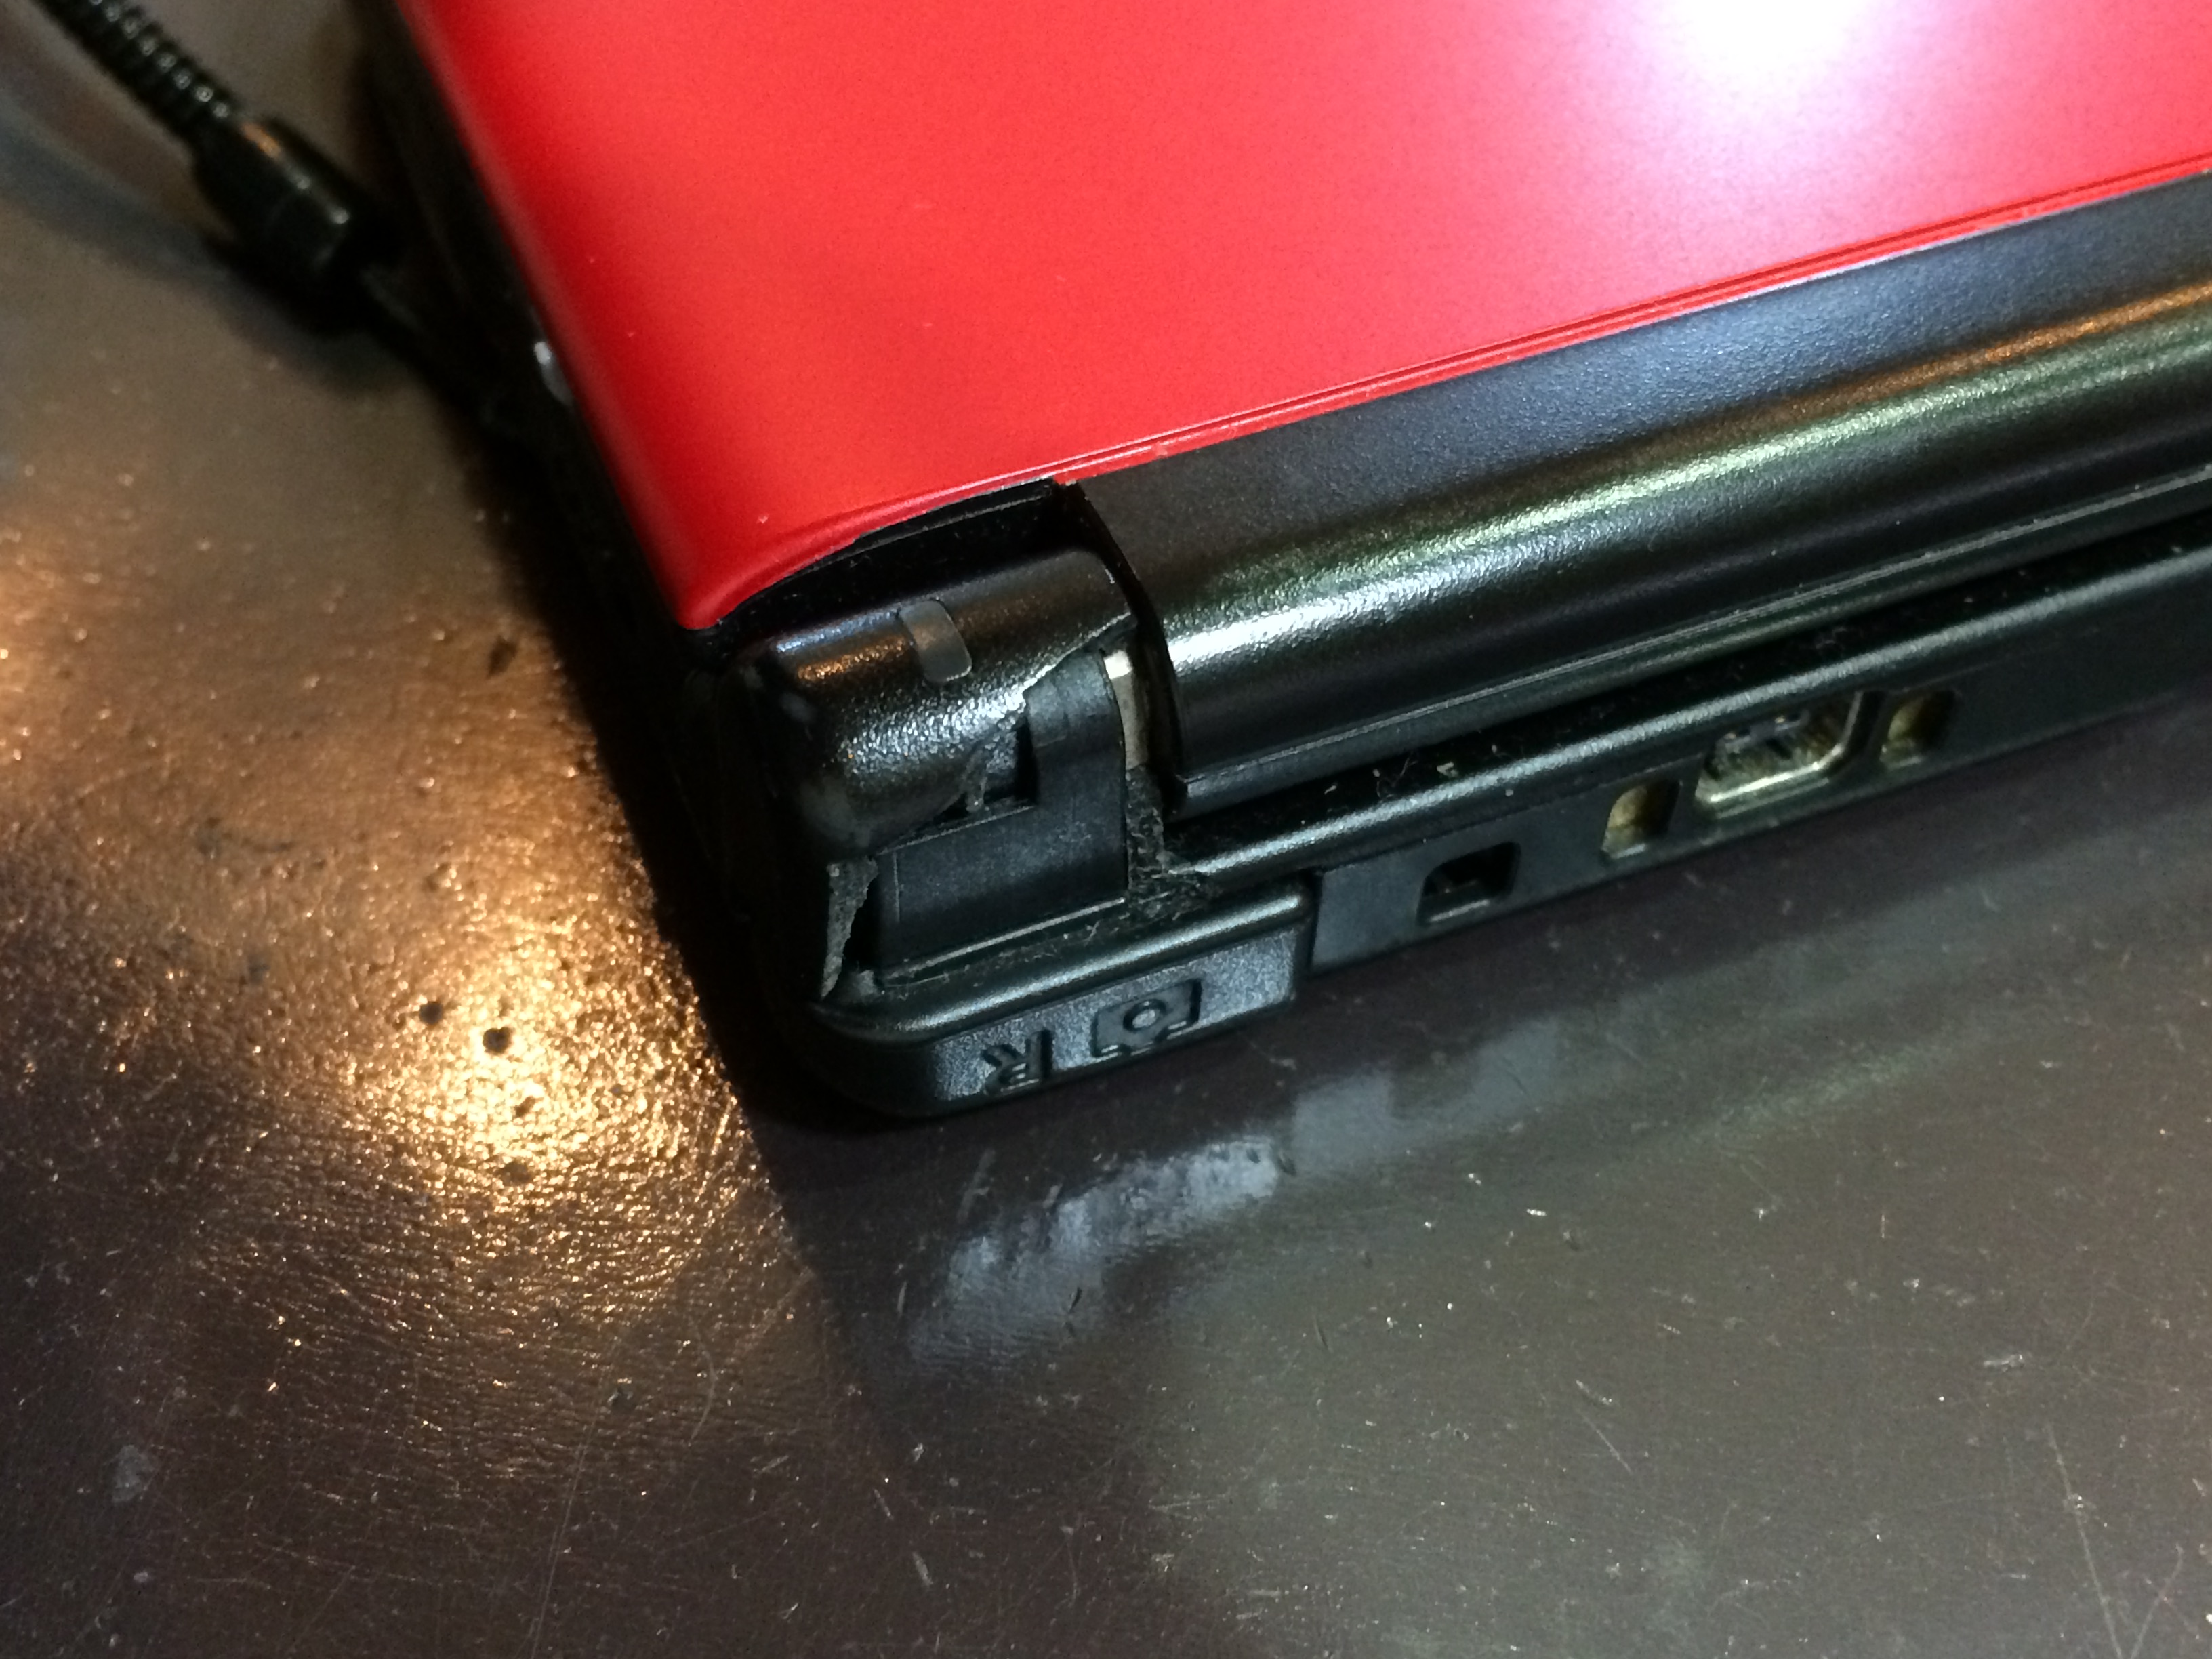 ３dsllでよくある破損 ヒンジ部分の割れ修理 Switch Nintendo3ds Psp 修理のゲームホスピタル Switch Nintendo3ds ニンテンドーds Psp 修理